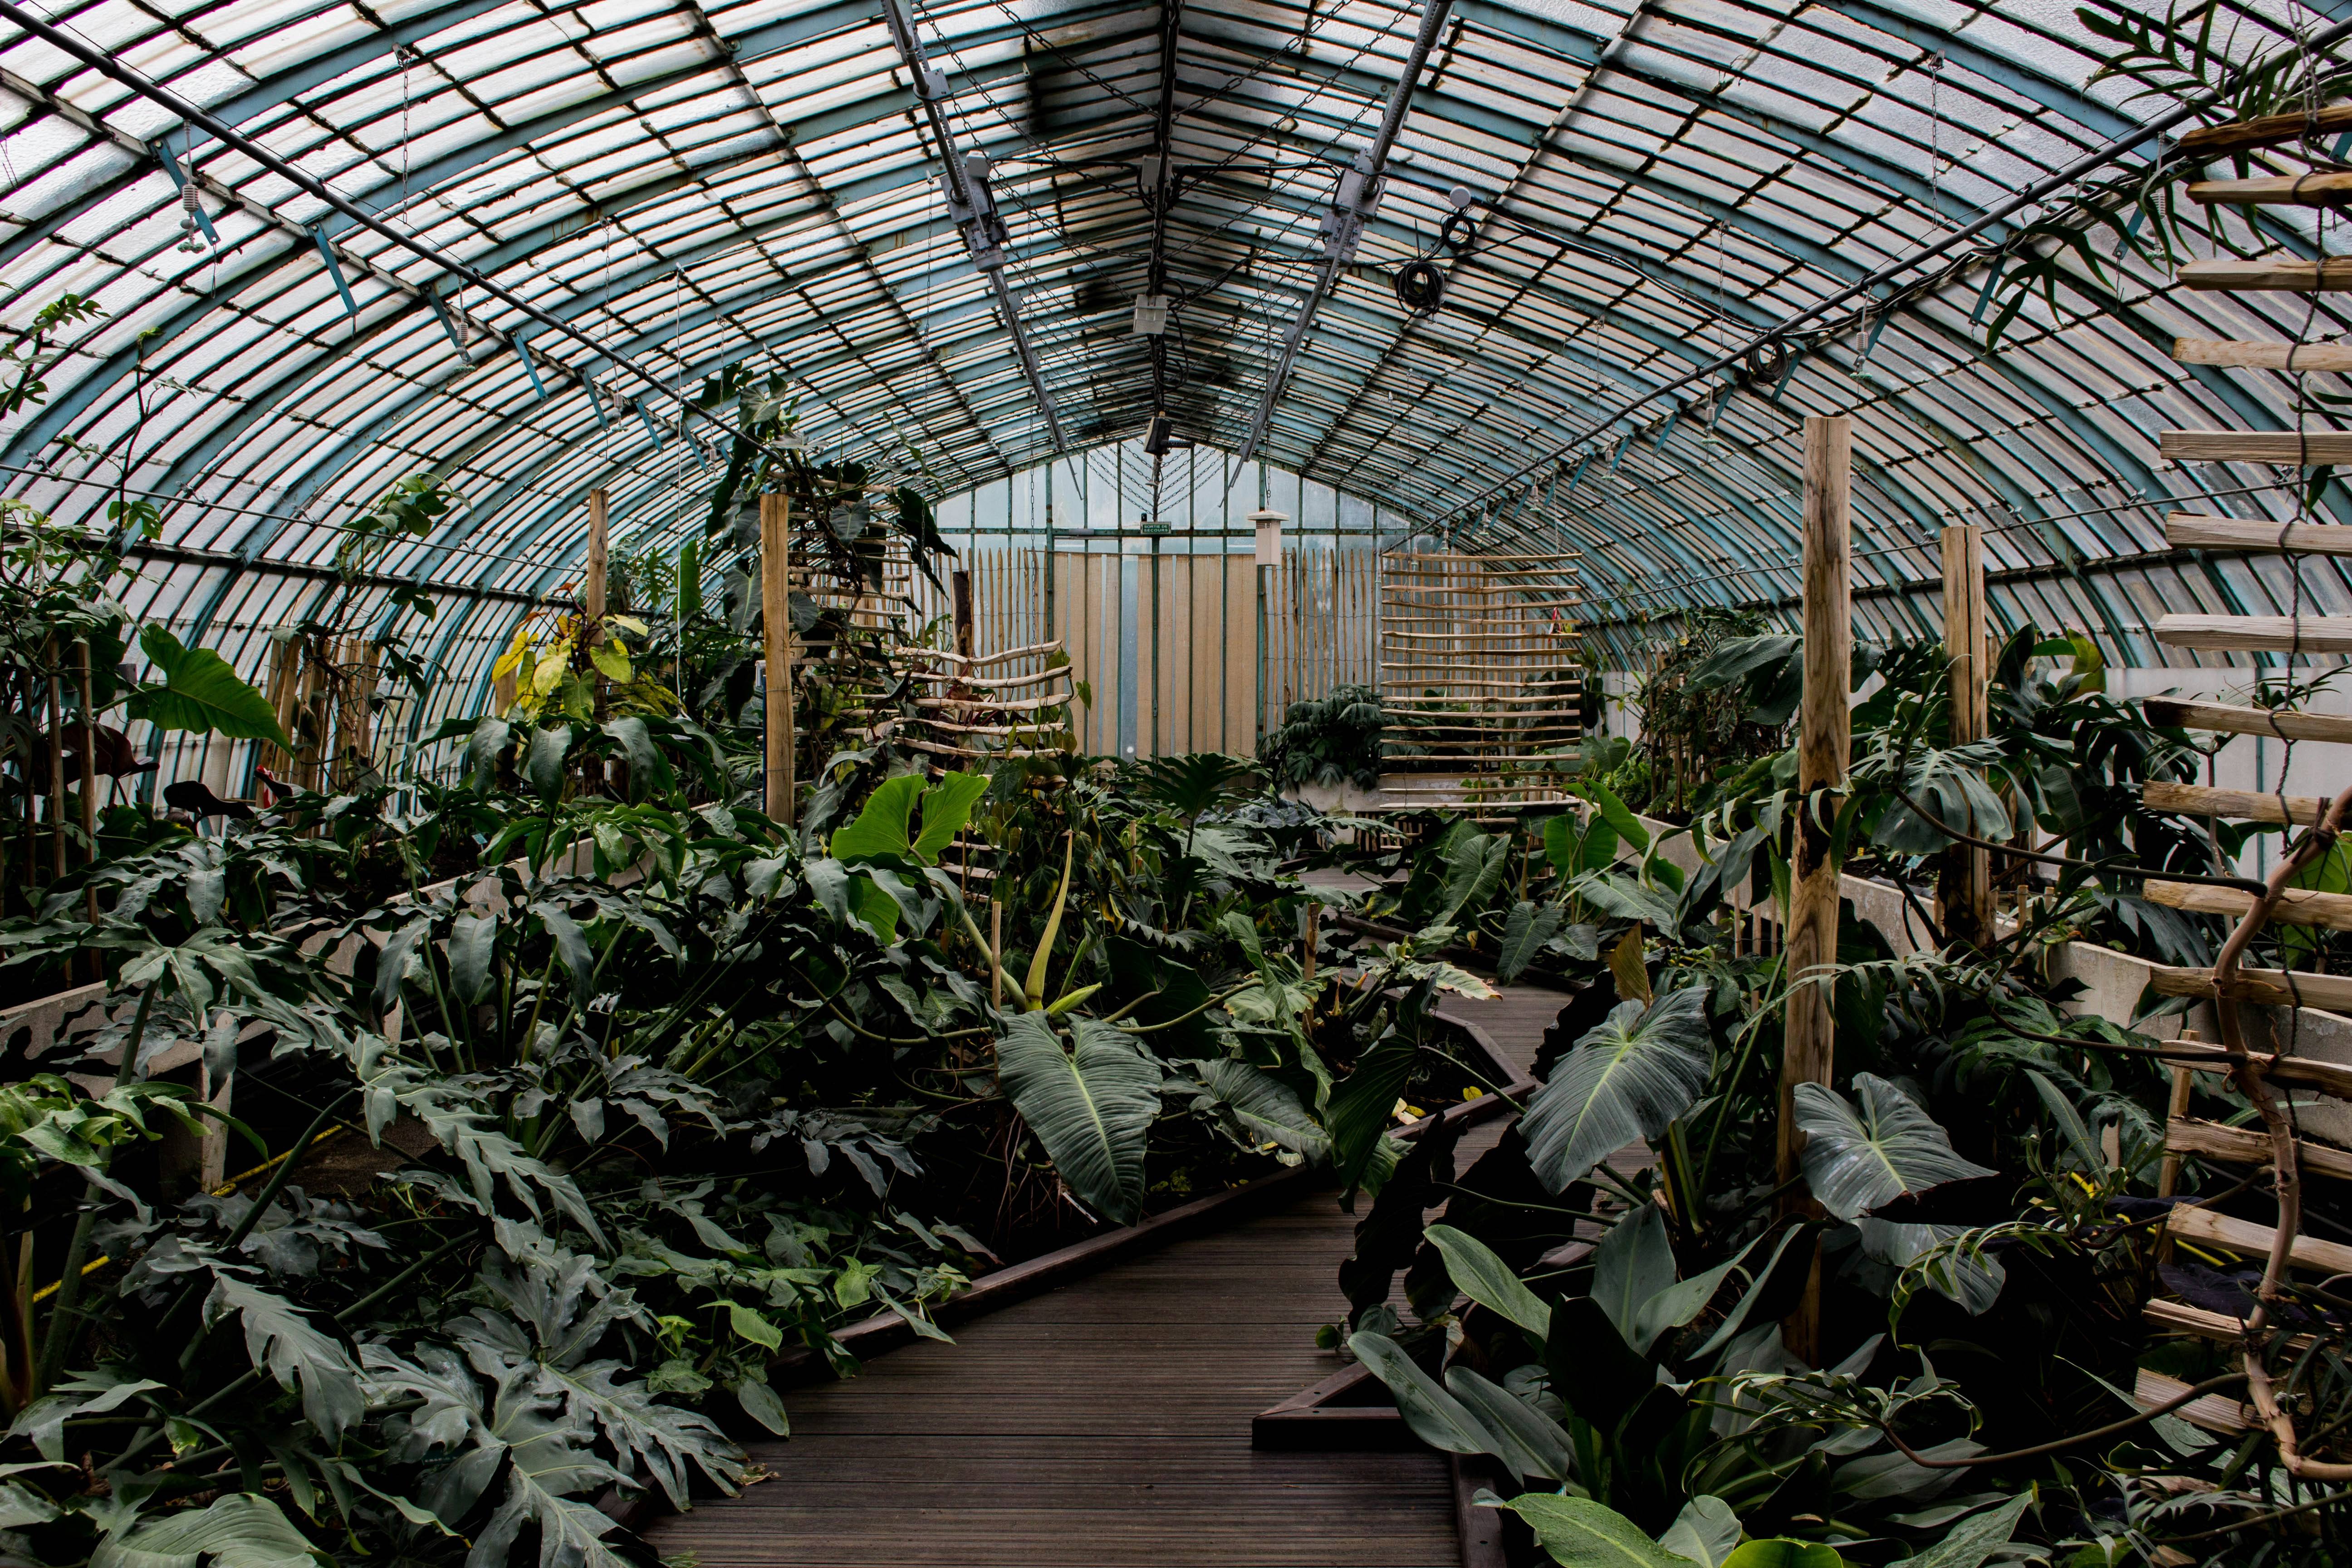 Jardins et Serres d’Auteuil Greenhouse in Paris